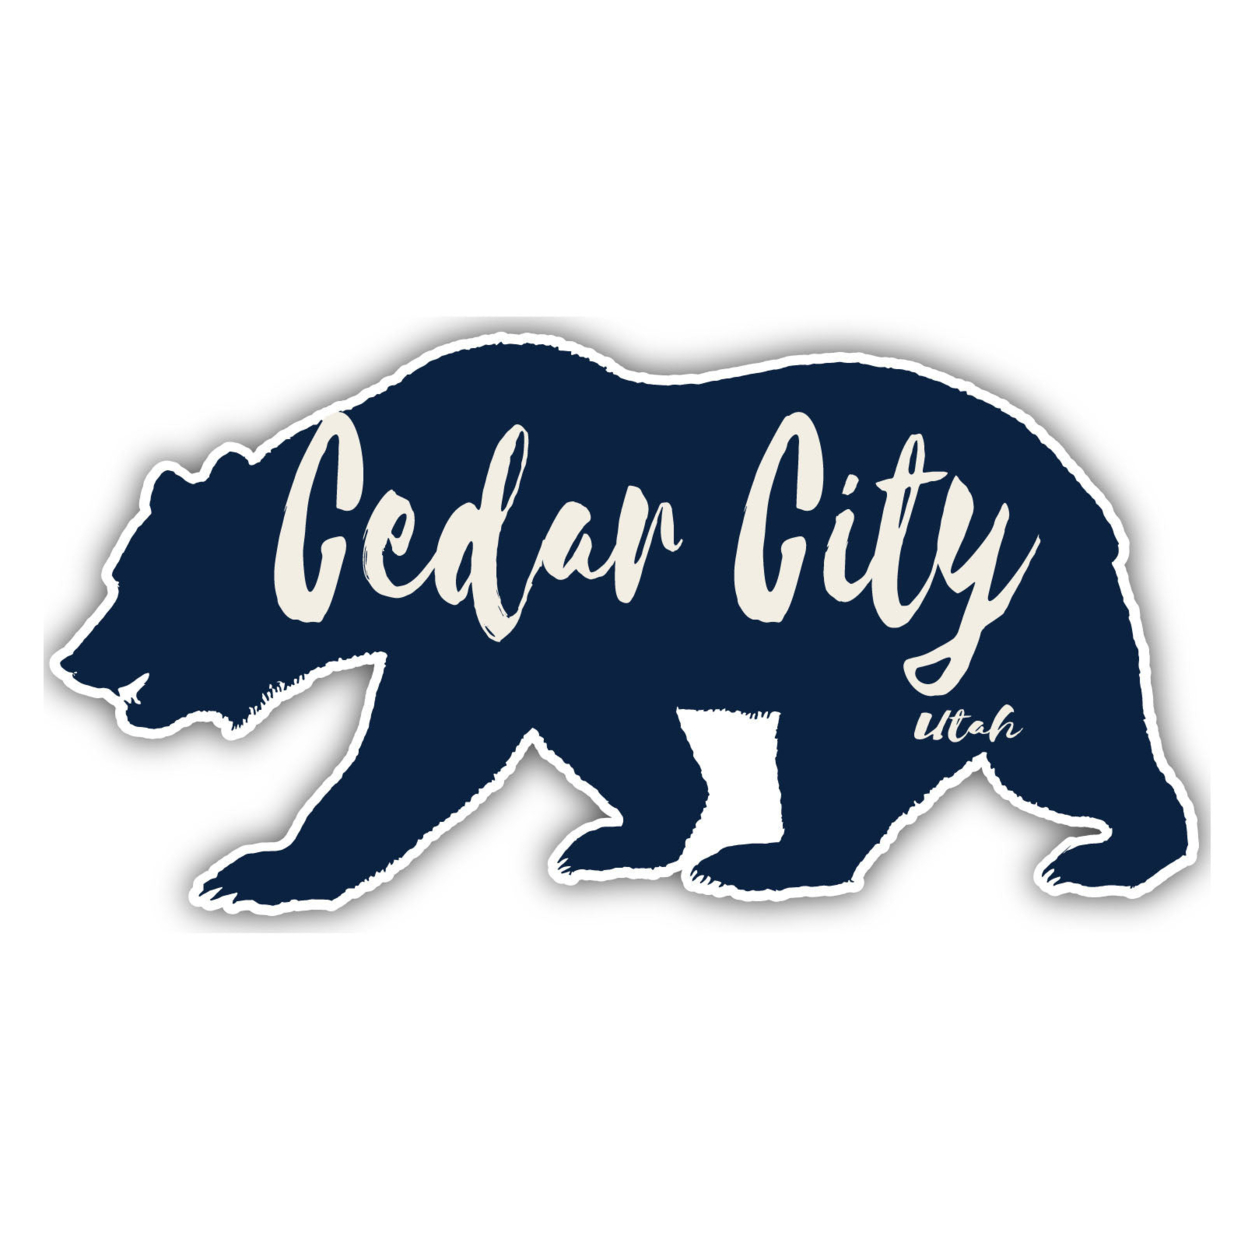 Cedar City Utah Souvenir Decorative Stickers (Choose Theme And Size) - 4-Pack, 4-Inch, Bear